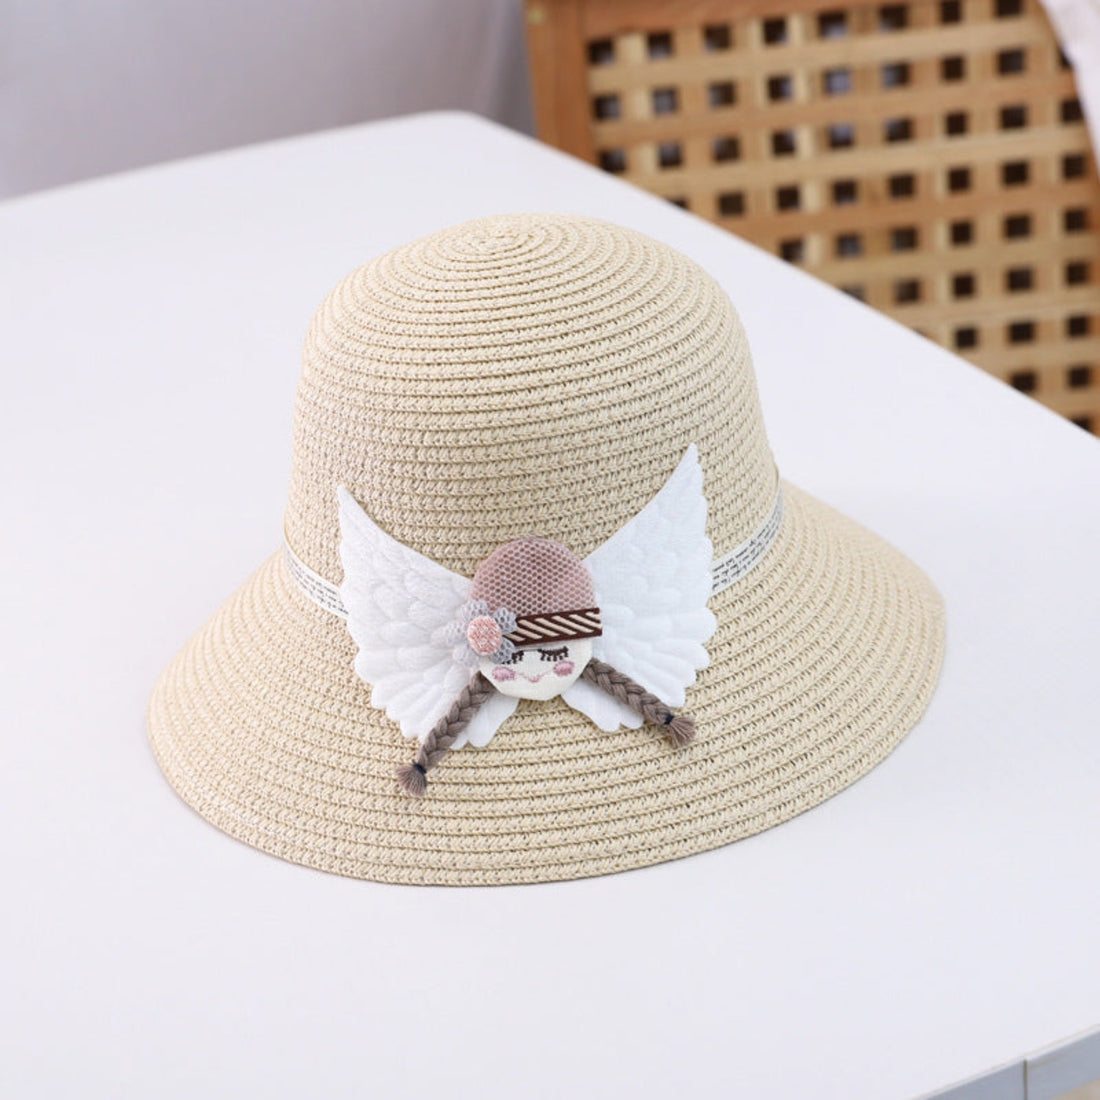 Summer accessories for kids: straw hat